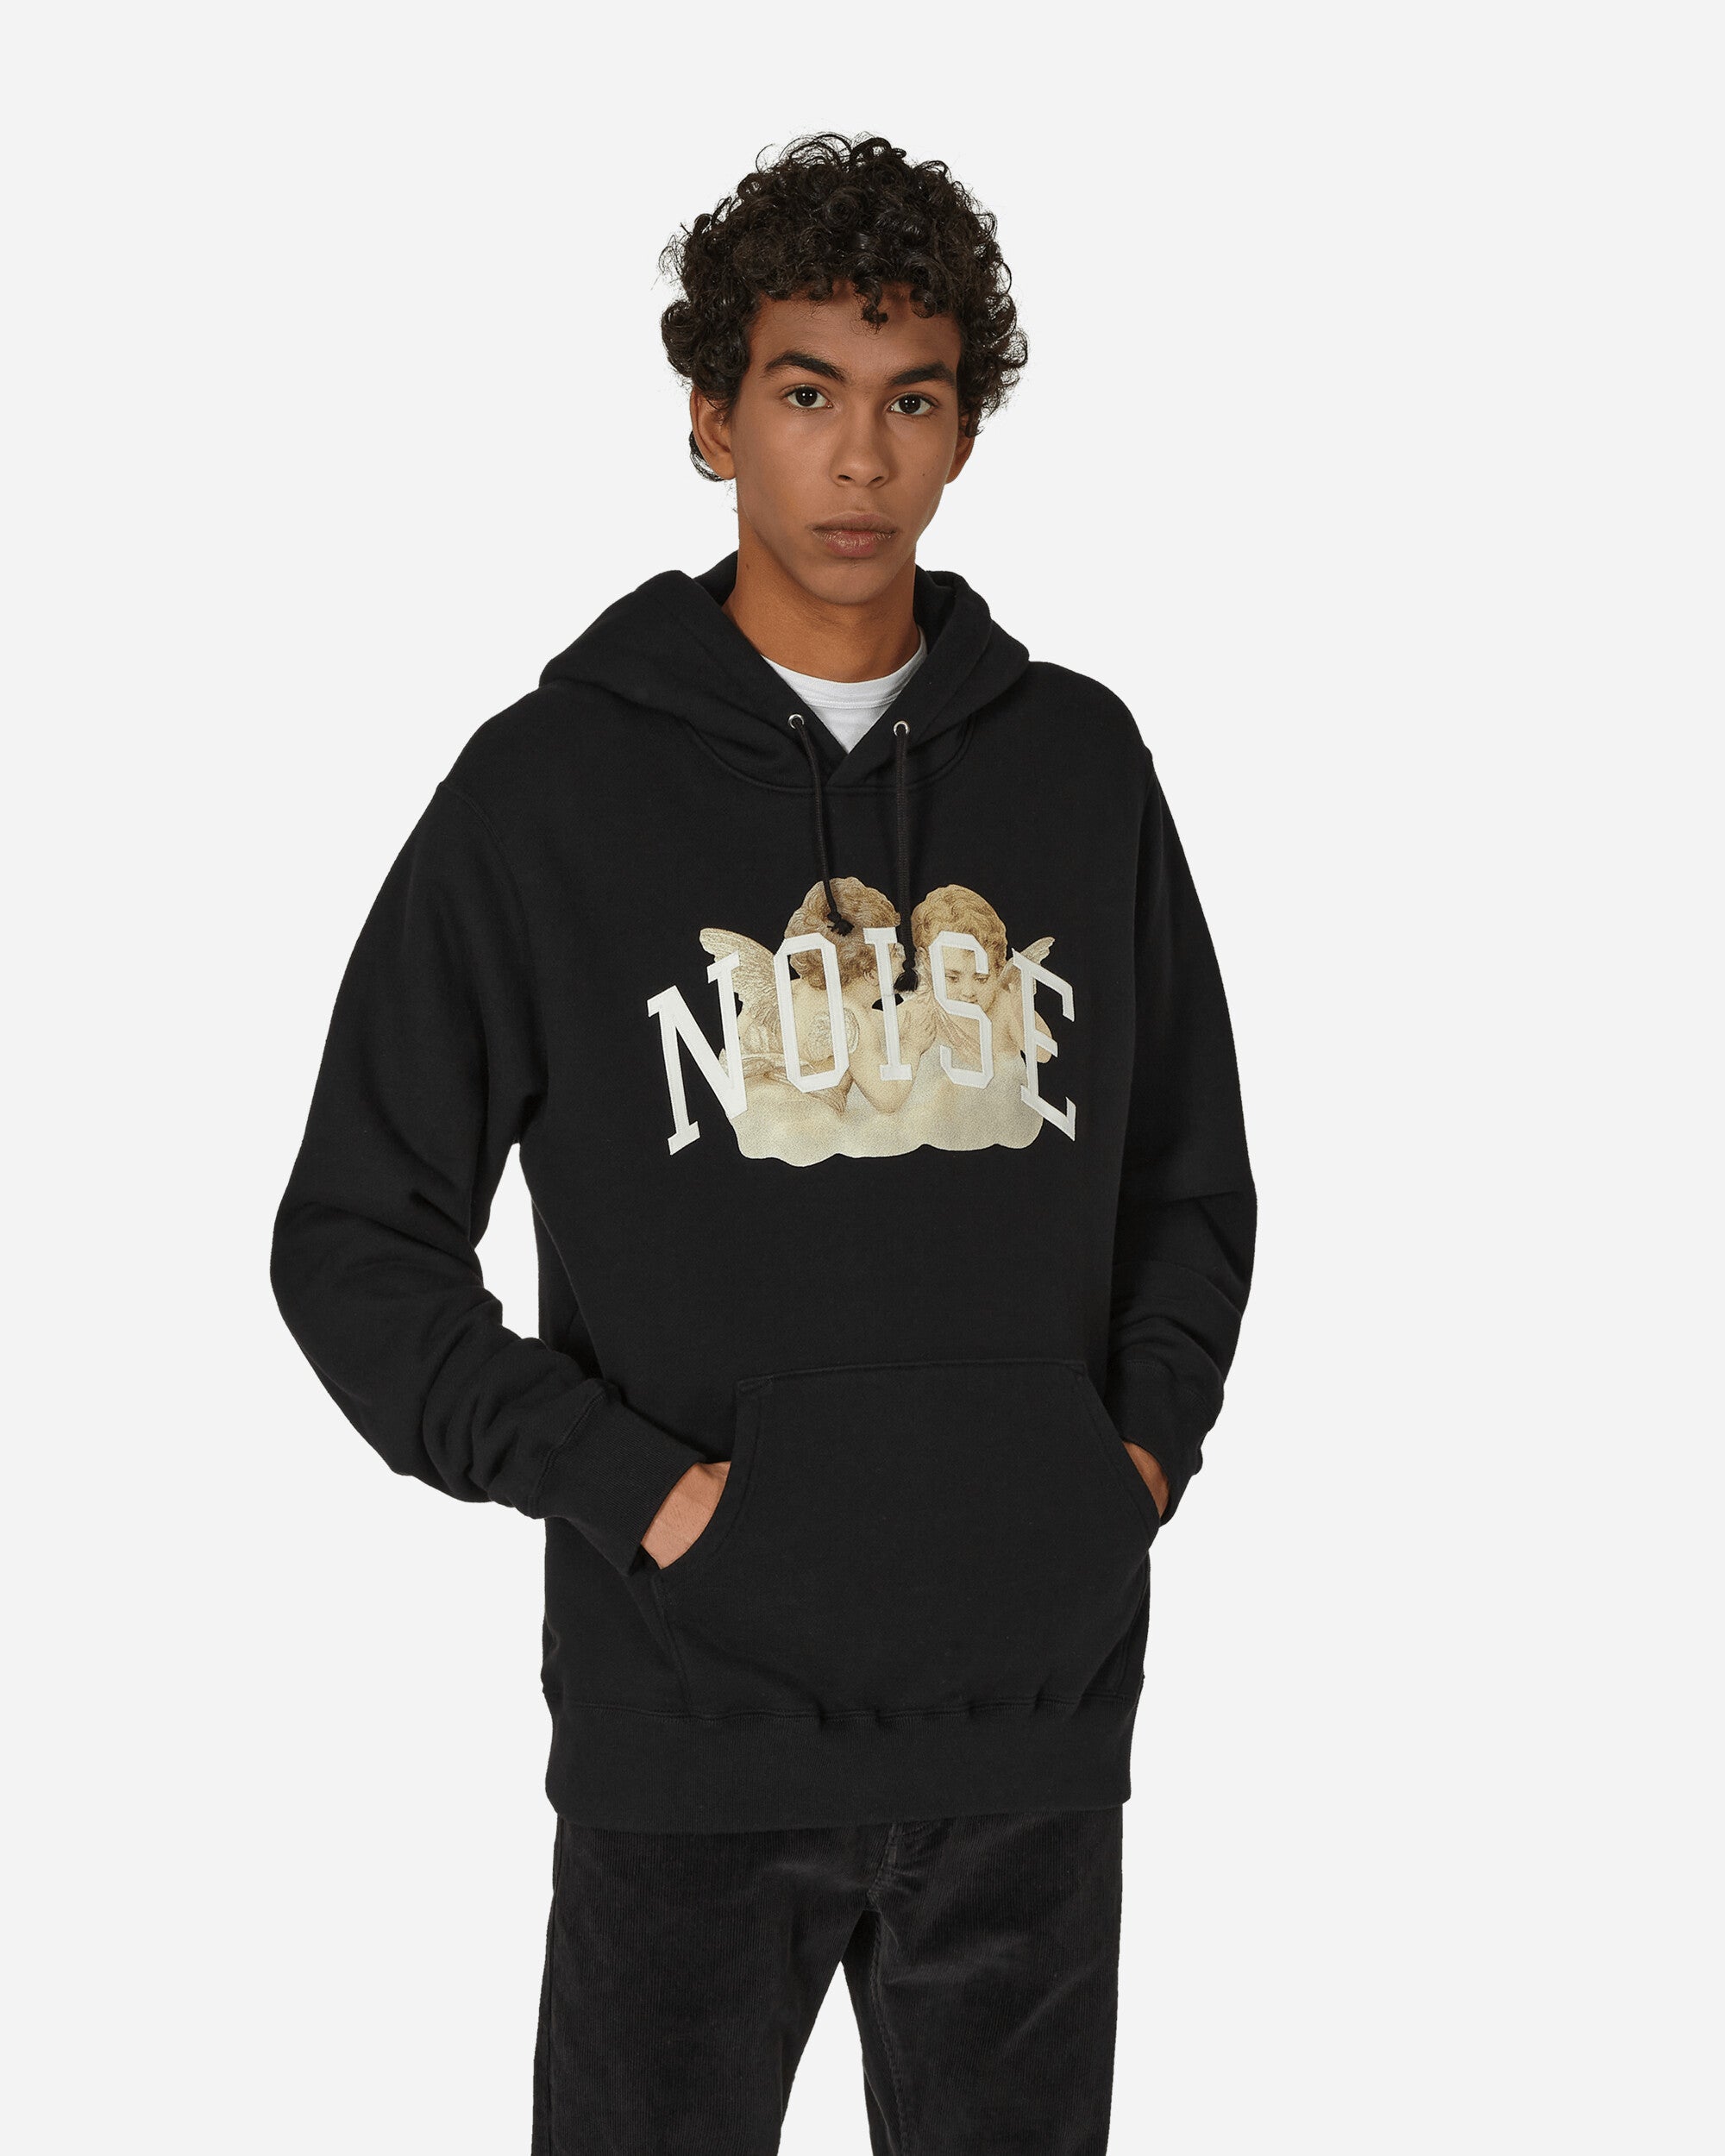 Noise Hooded Sweatshirt Black